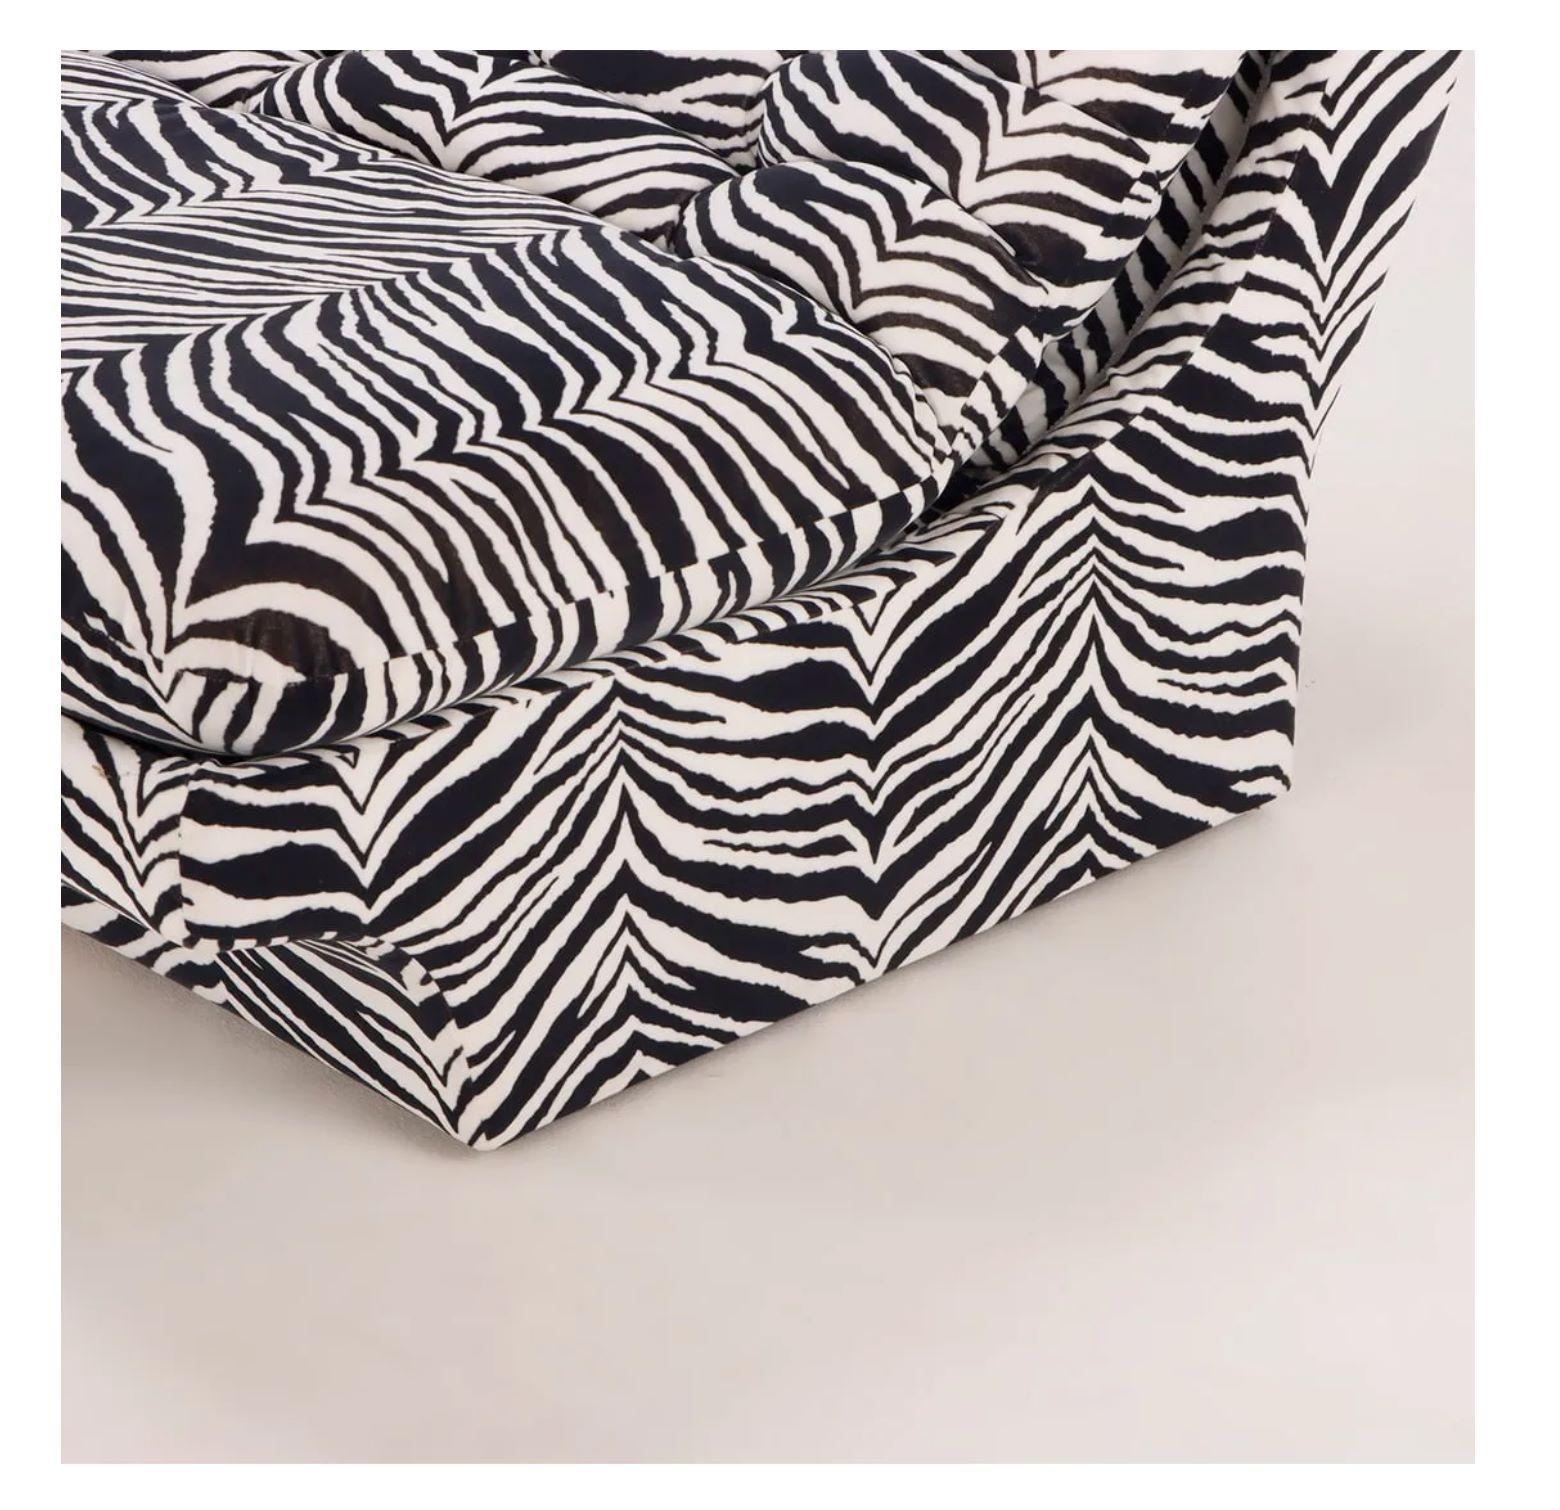 Late 20th Century 3-Piece Italian Modular Sofa in Zebra Print Upholstery, circa 1970 For Sale